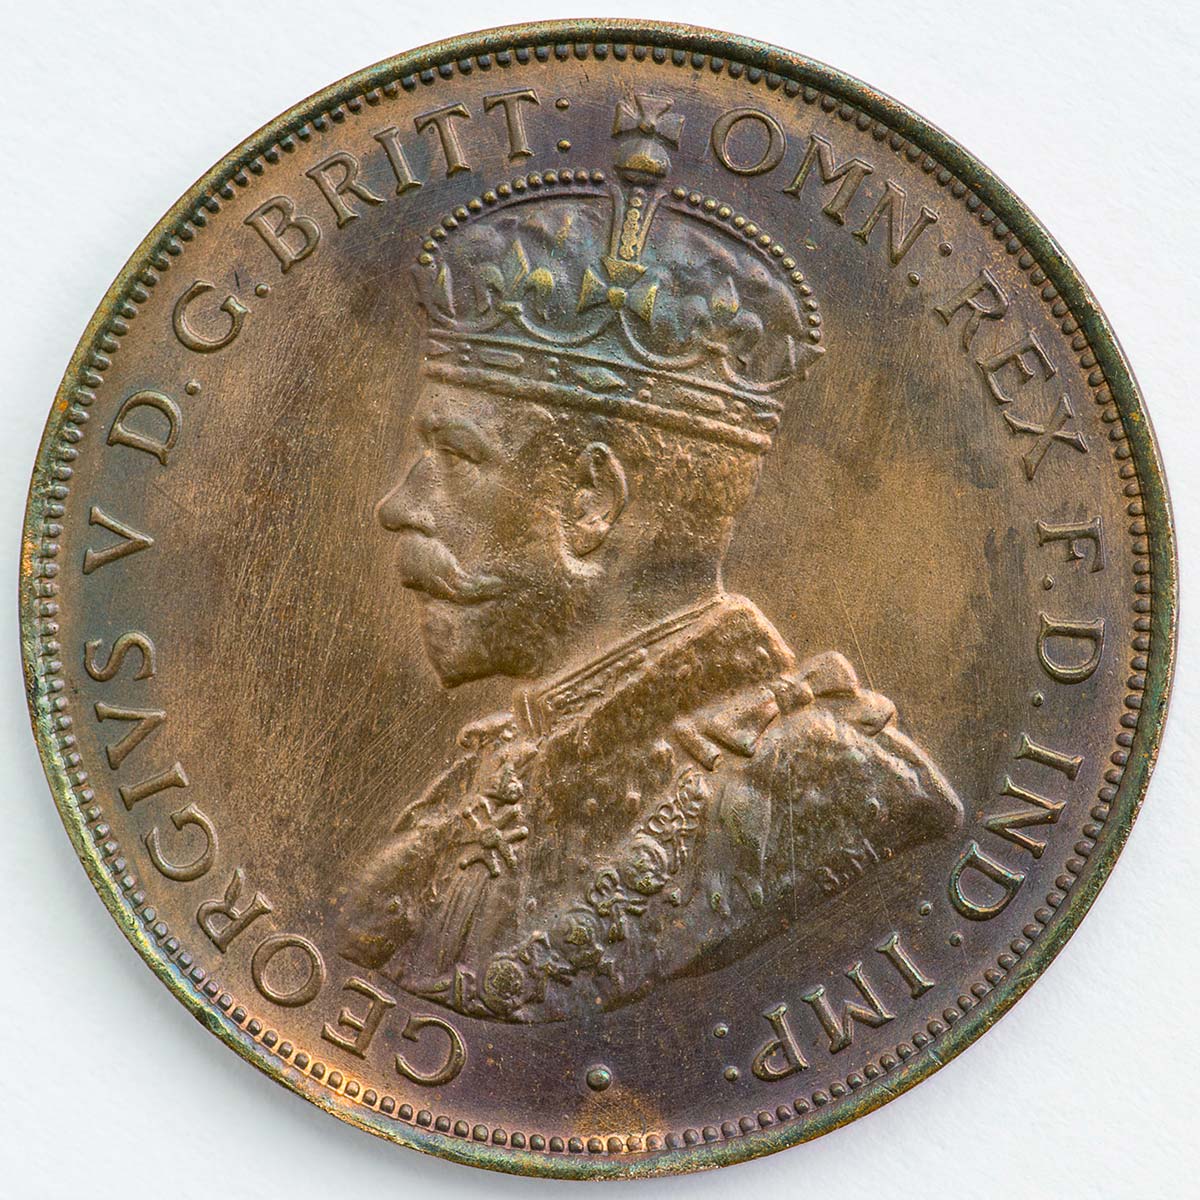 value of 1935 australian penny